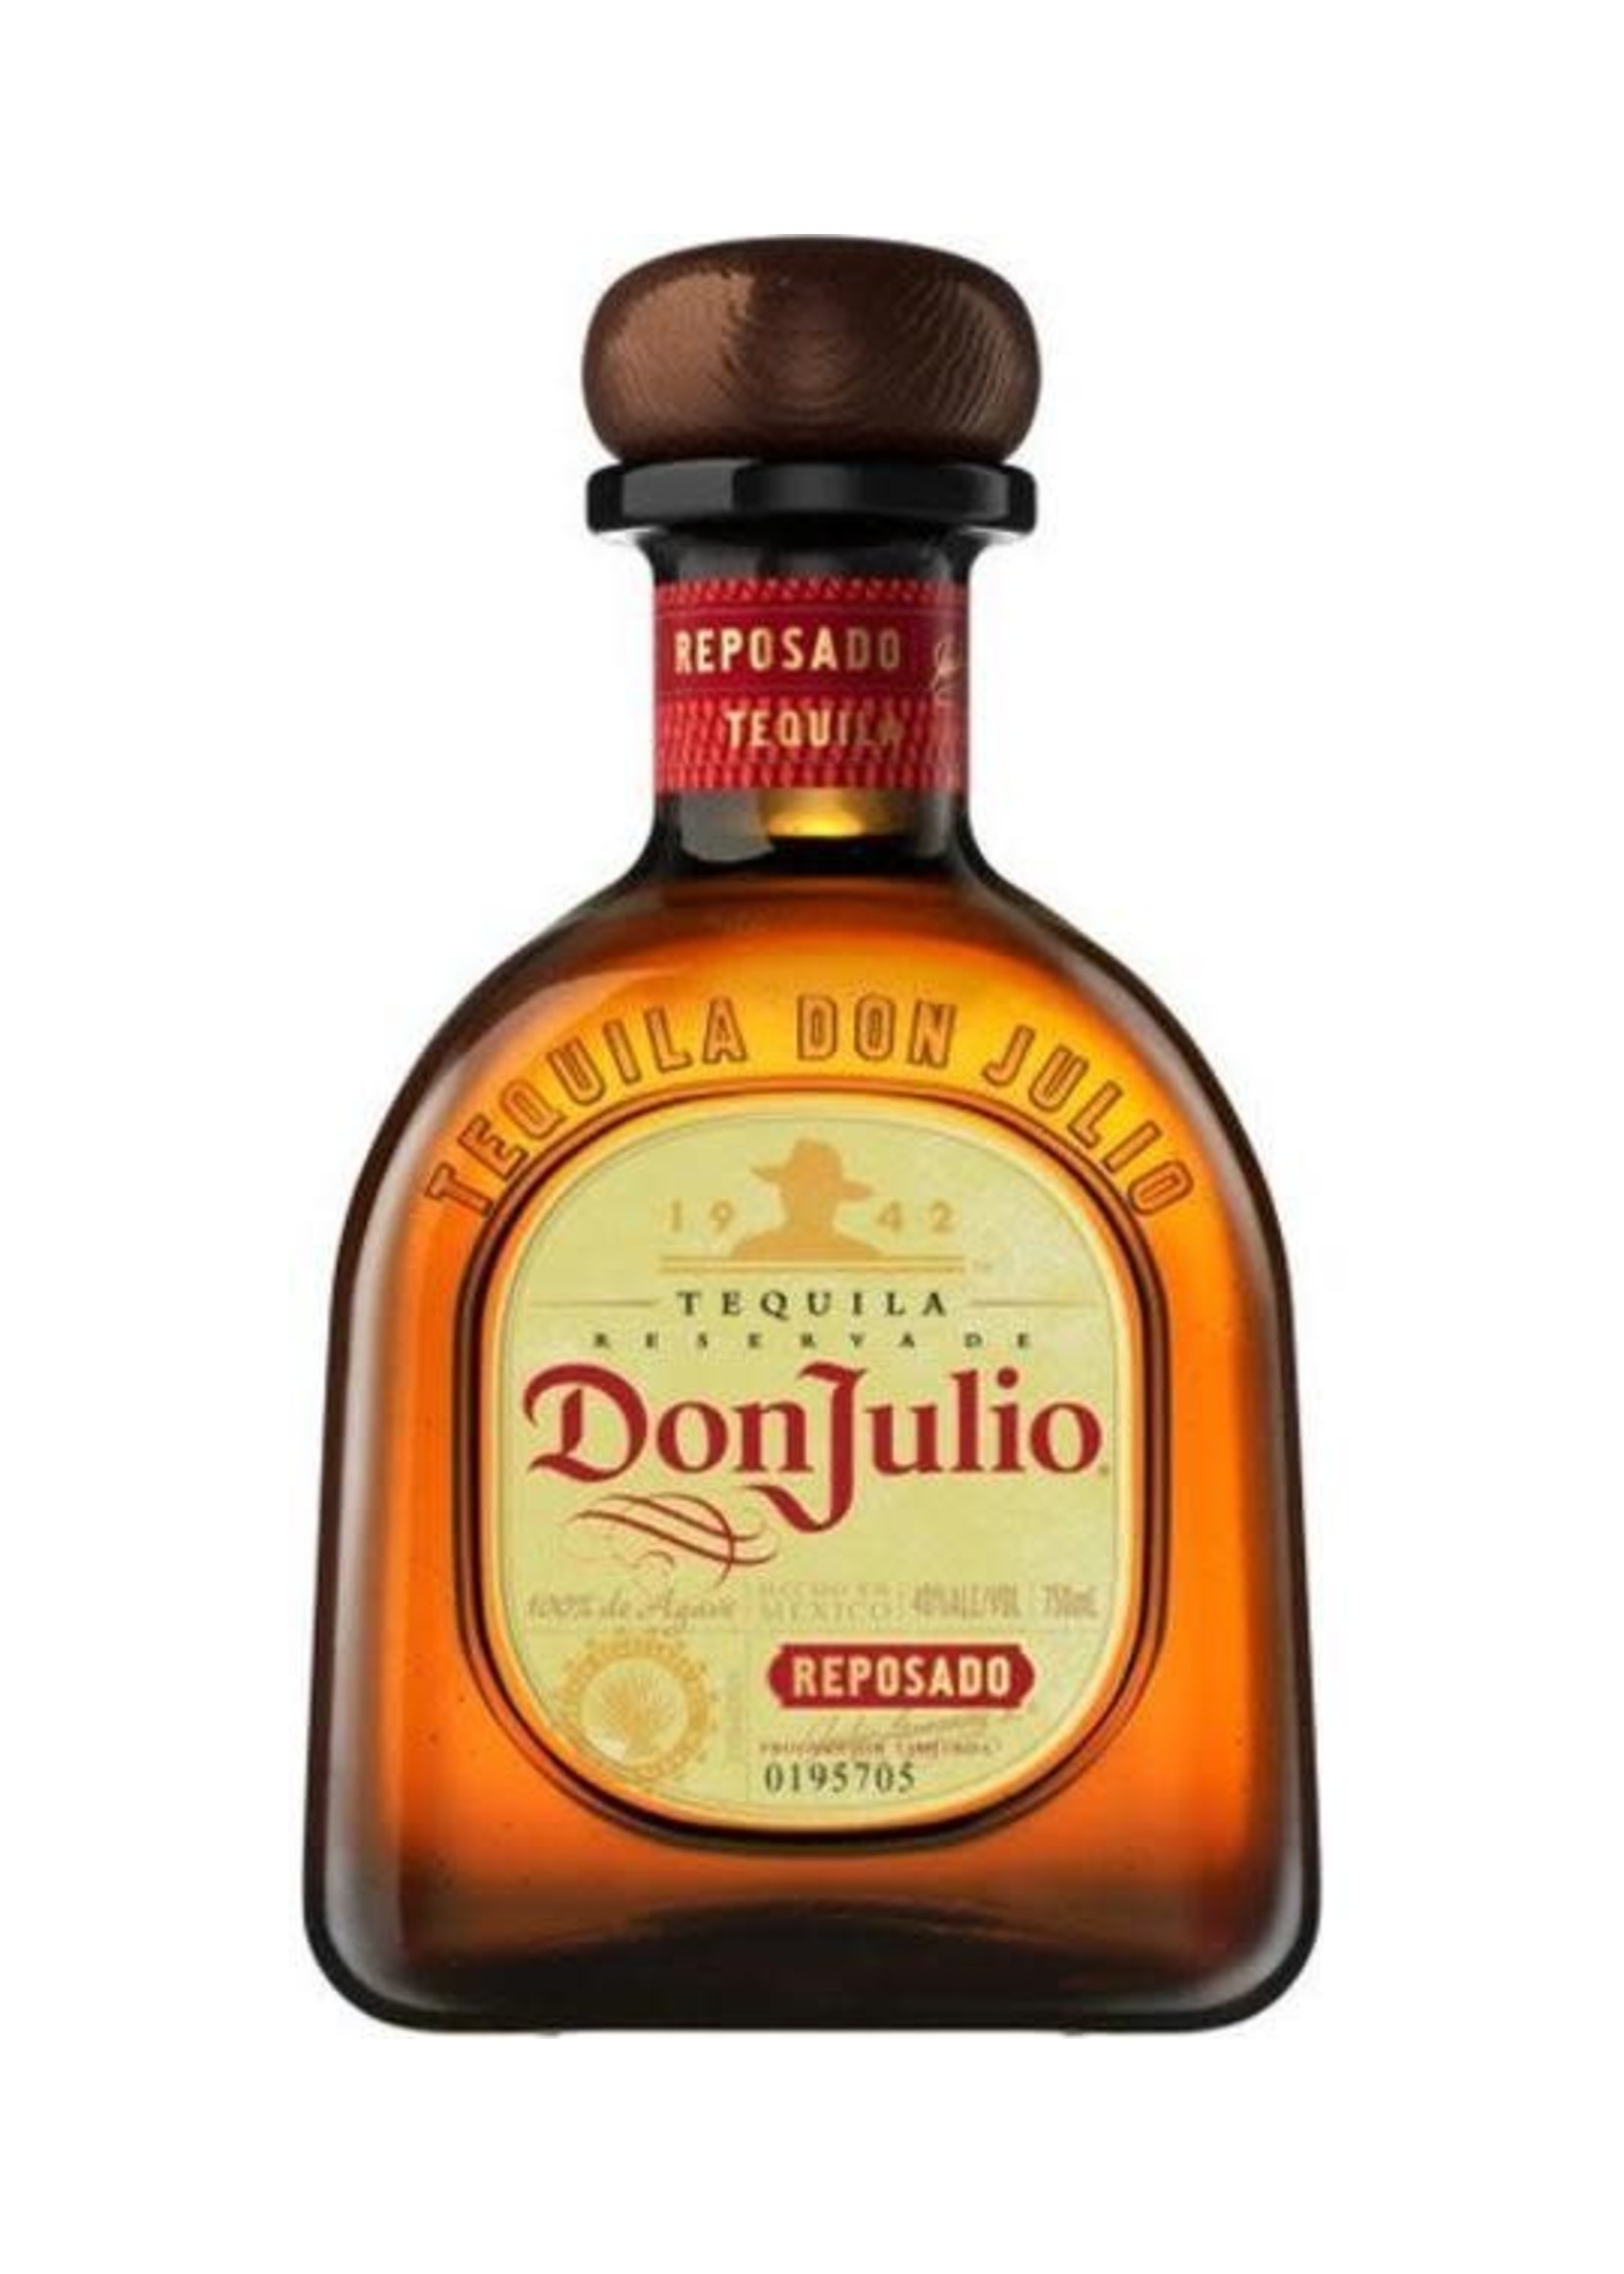 Don Julio Don Julio / Reposado Tequila 40% / 750 mL